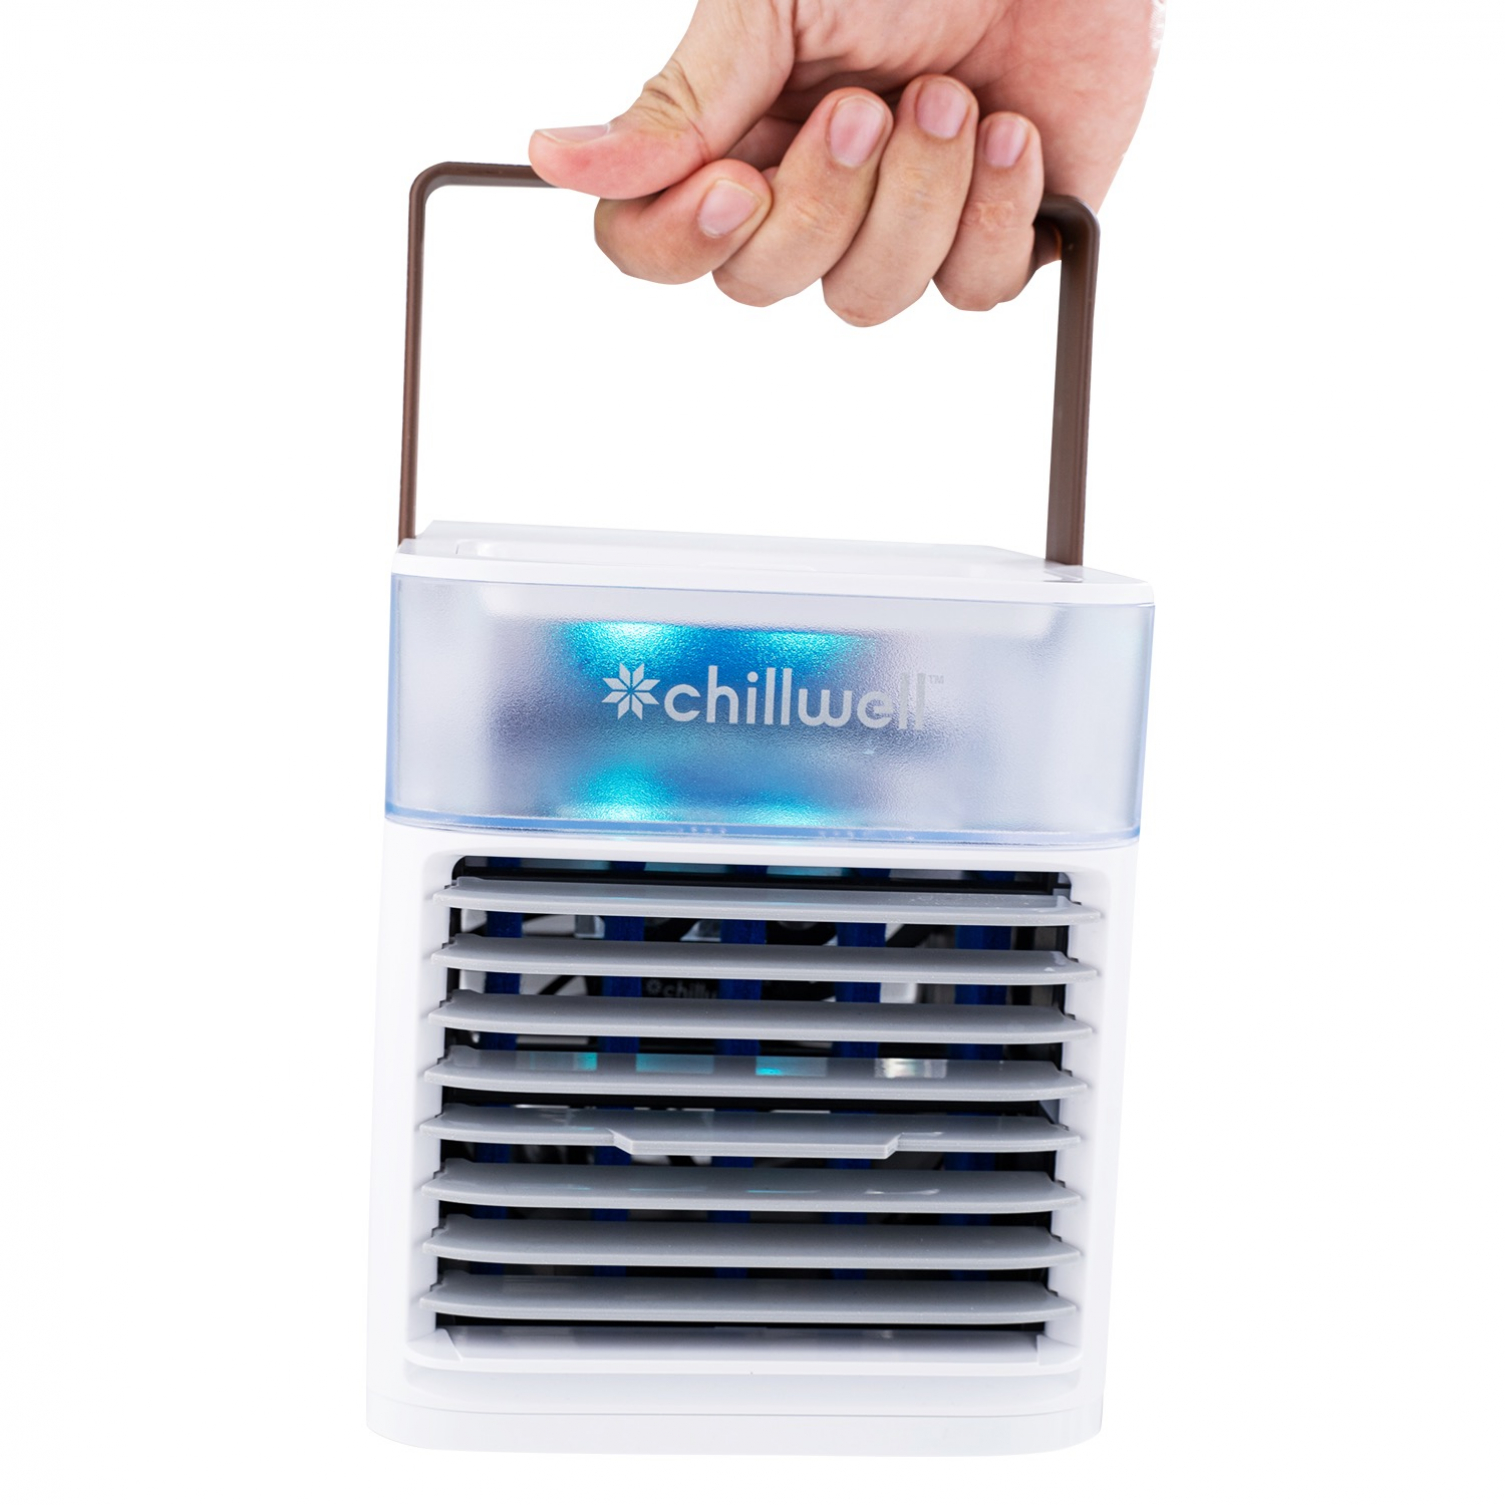 Chillwell Ac Mini Aircon Cooler